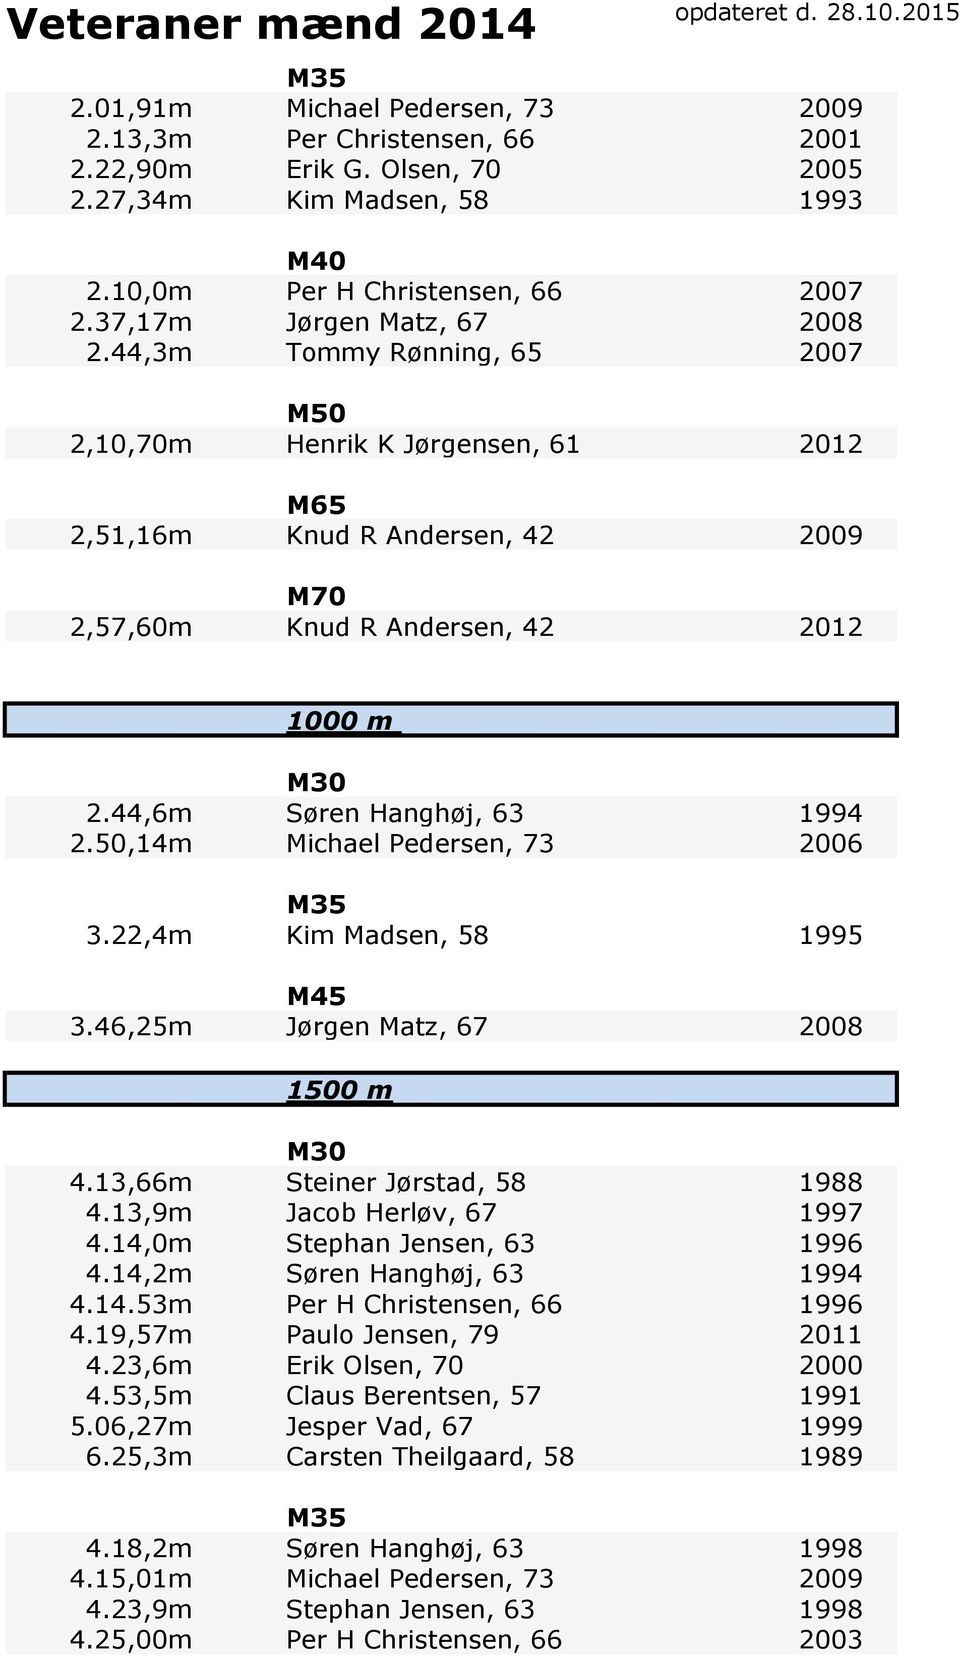 50,14m Michael Pedersen, 73 2006 3.22,4m Kim Madsen, 58 1995 3.46,25m Jørgen Matz, 67 2008 1500 m 4.13,66m Steiner Jørstad, 58 1988 4.13,9m Jacob Herløv, 67 1997 4.14,0m Stephan Jensen, 63 1996 4.